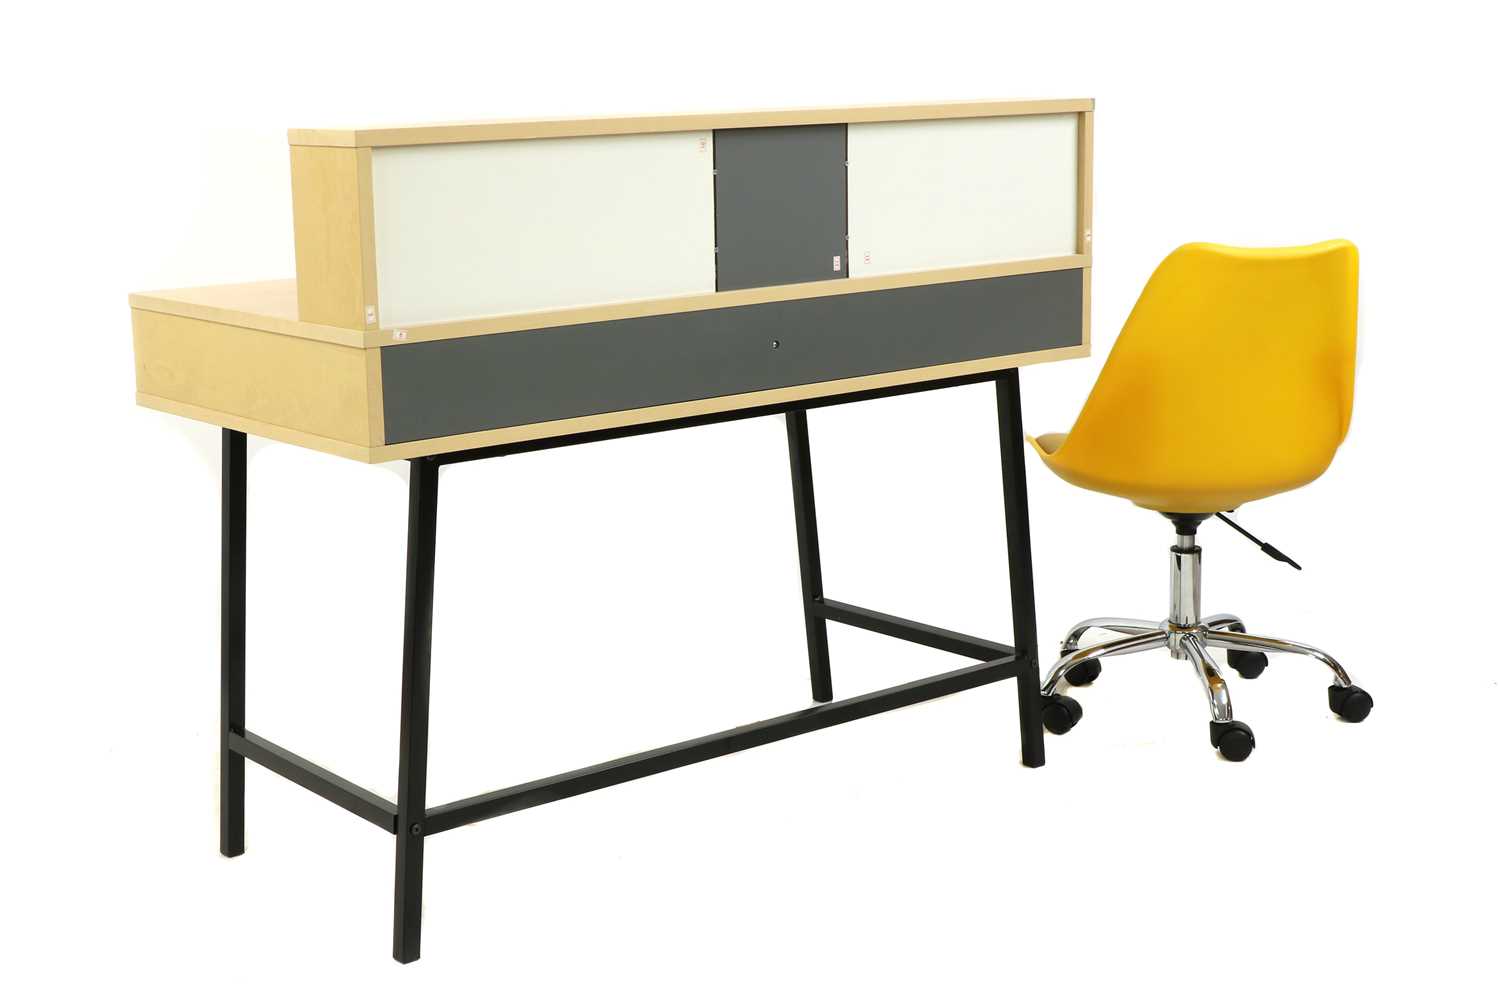 A modern office desk by Maisons du Monde, - Image 3 of 4